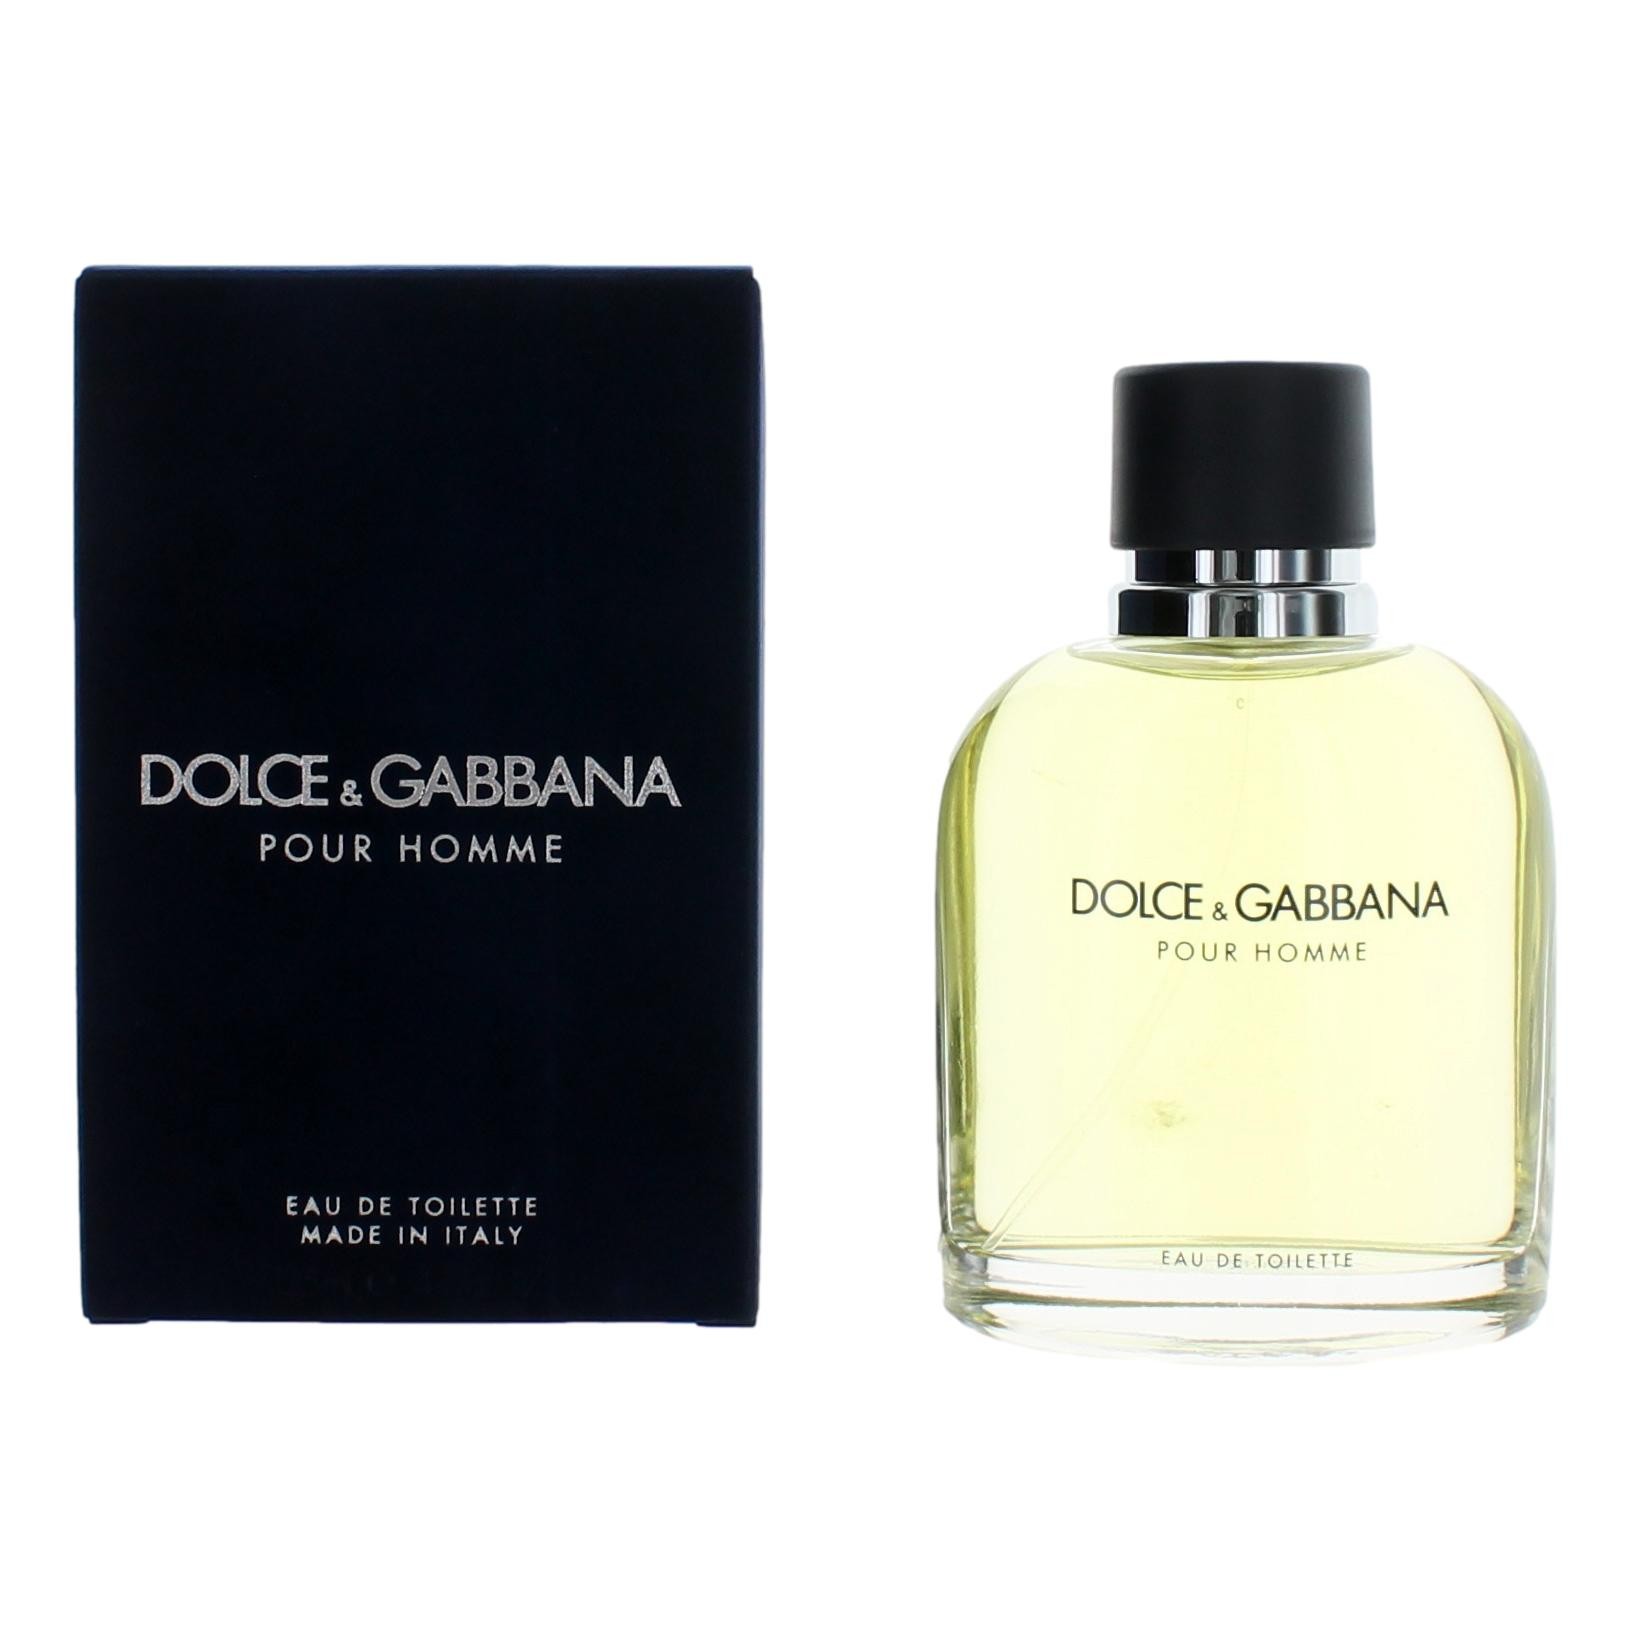 Dolce & Gabbana by Dolce & Gabbana 4.2 oz Eau De Toilette Spray for Men